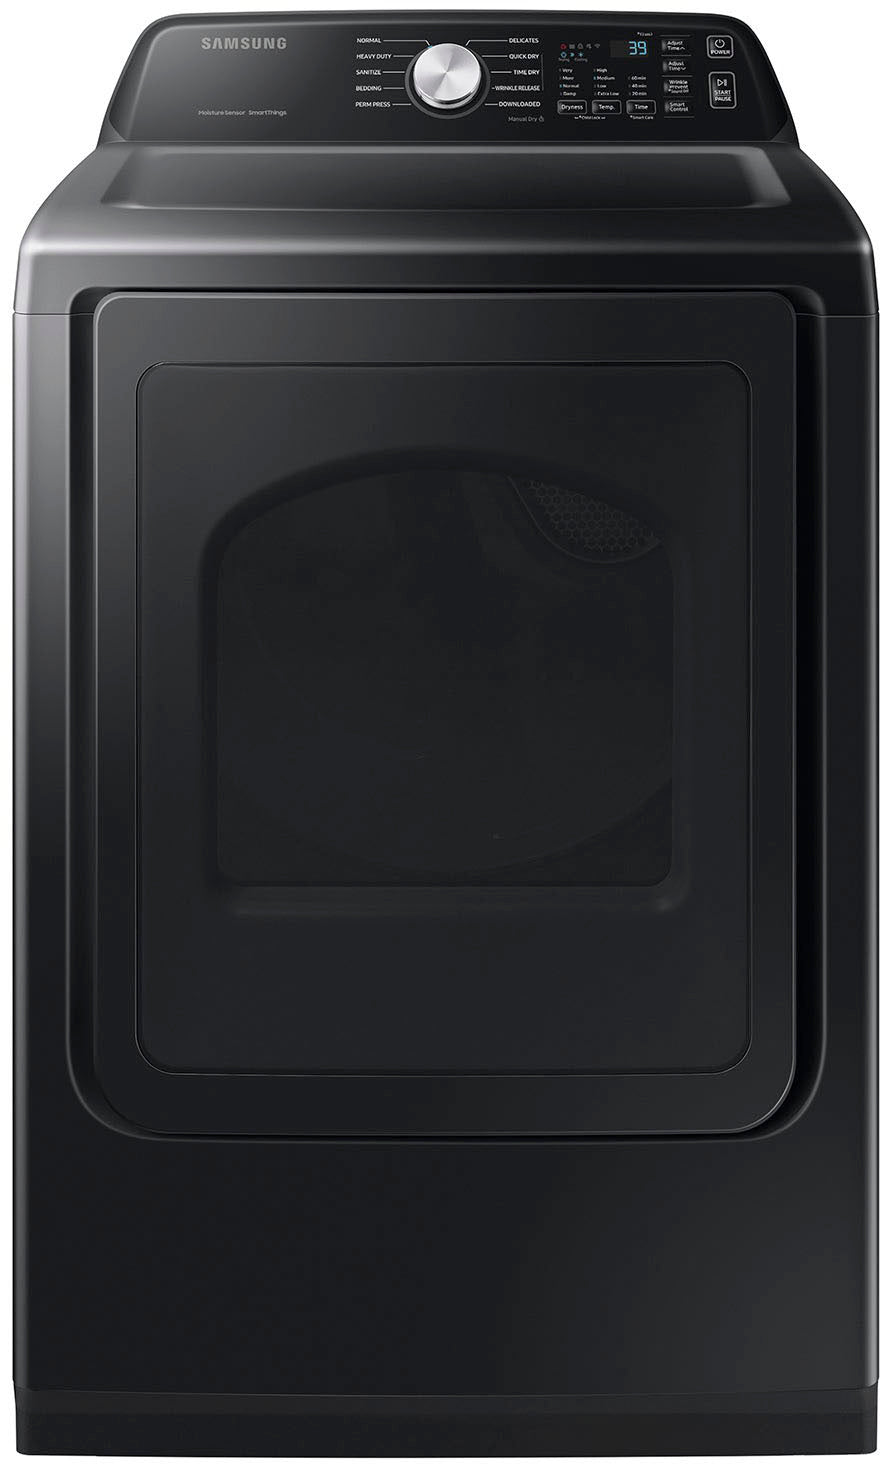 Samsung - 7.4 cu. ft. Smart Electric Dryer with Sensor Dry - Black_0